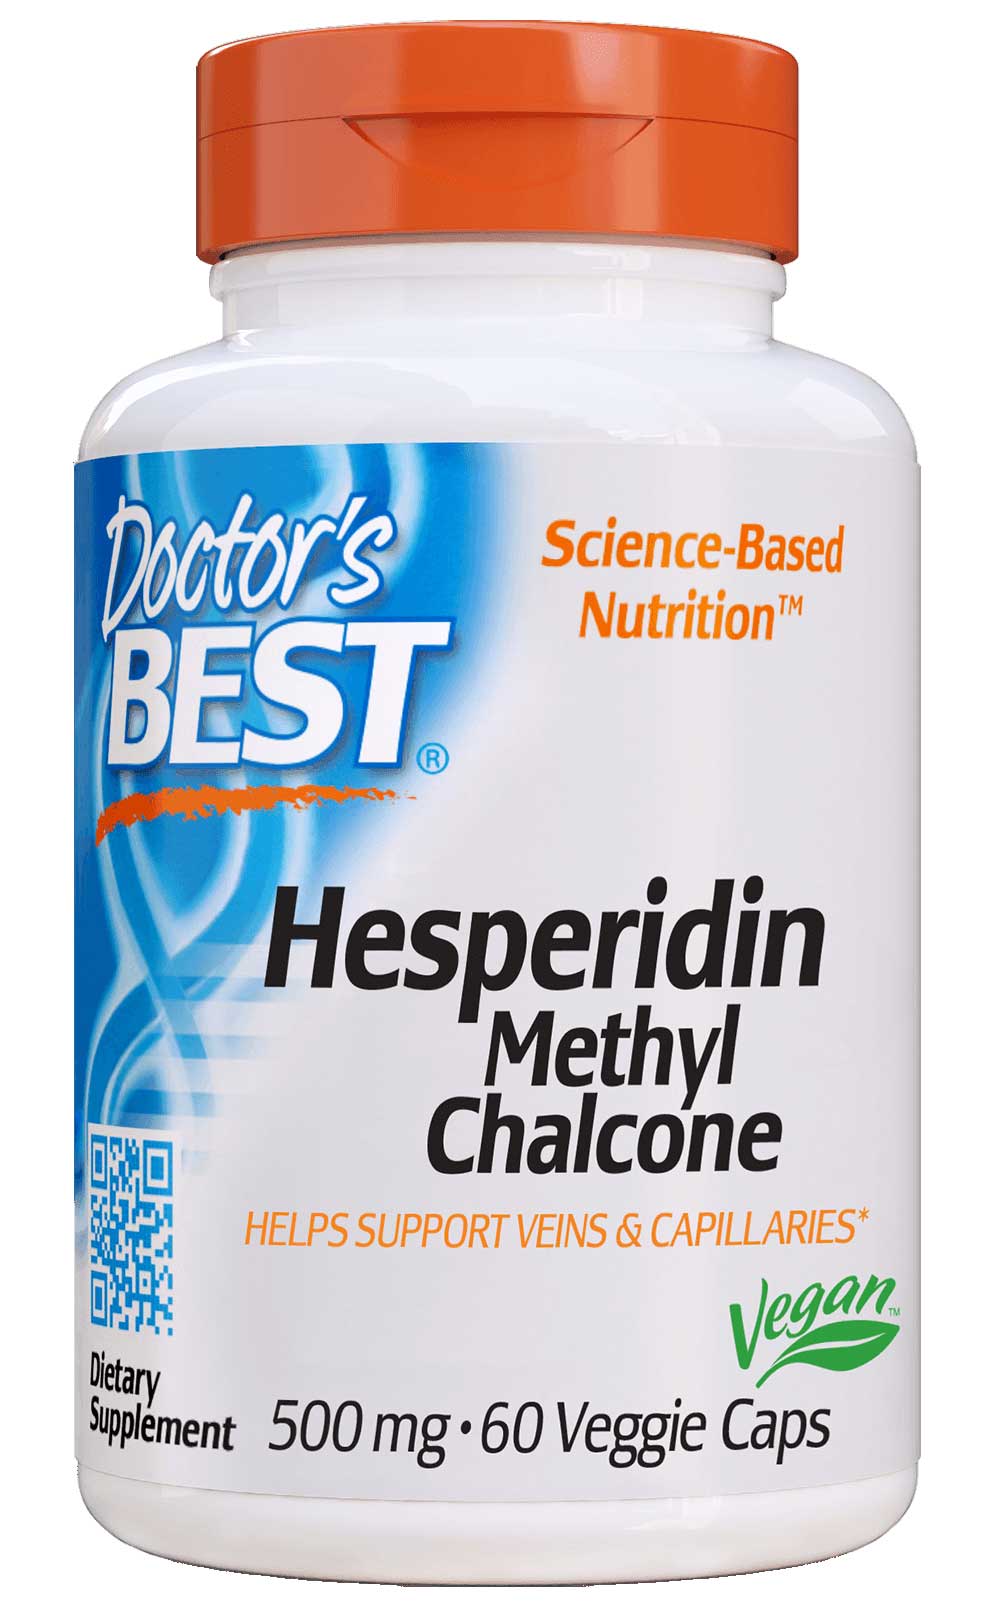 Doctor's Best Hesperidin Methyl Chalcone